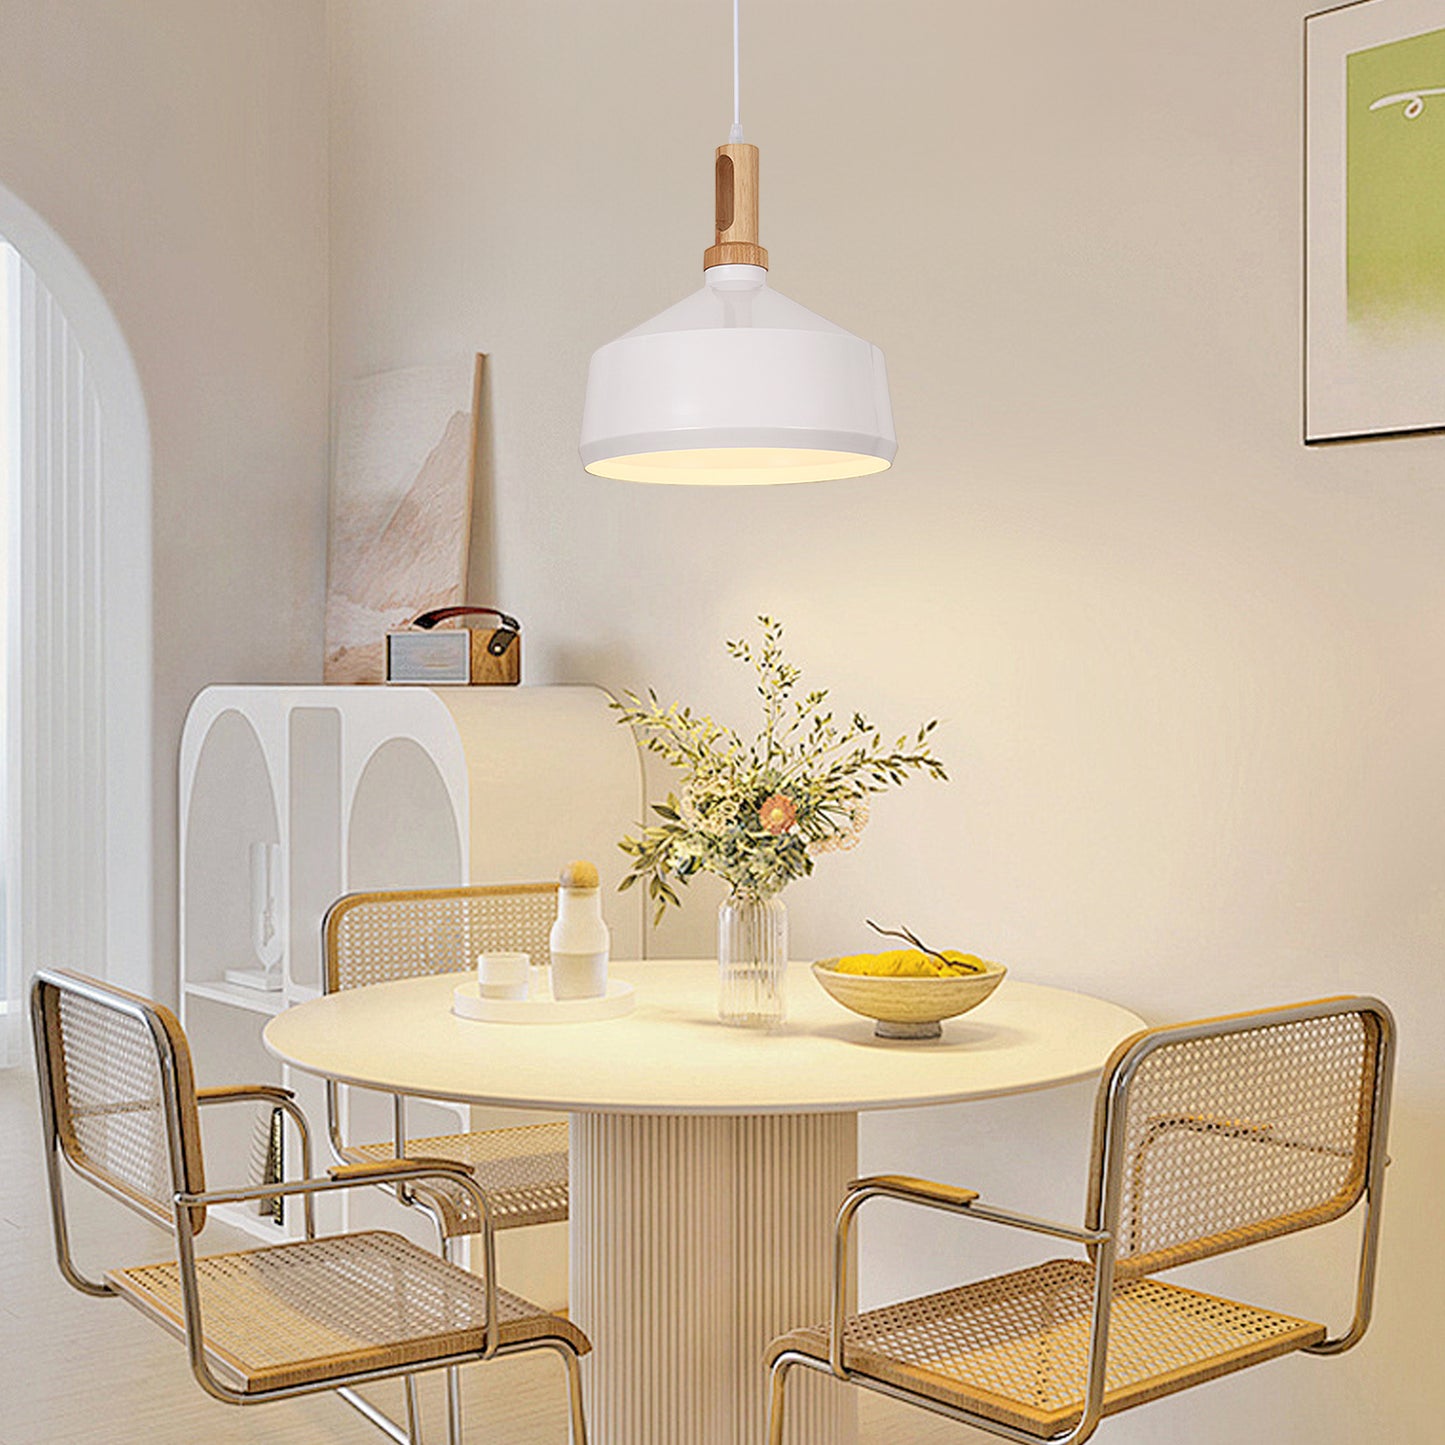 (N) ARTURESTHOME French Minimalist High Art Chandelier Living Room Lighting Fixtures